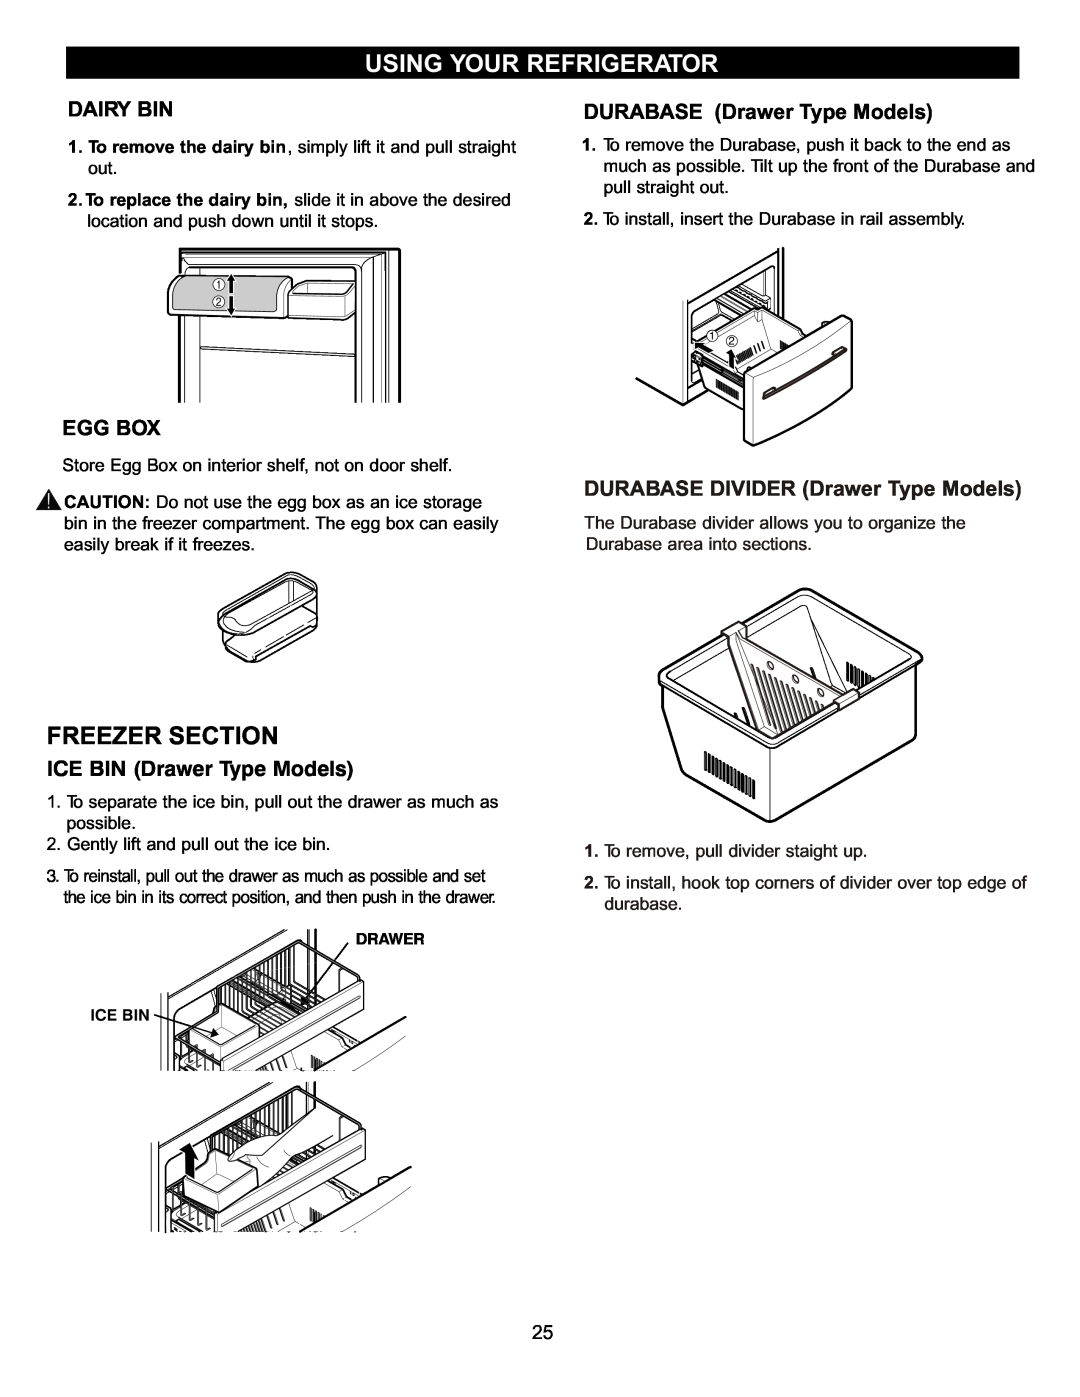 LG Electronics LBN2251 manual Freezer Section, Dairy Bin, DURABASE Drawer Type Models, Egg Box, ICE BIN Drawer Type Models 